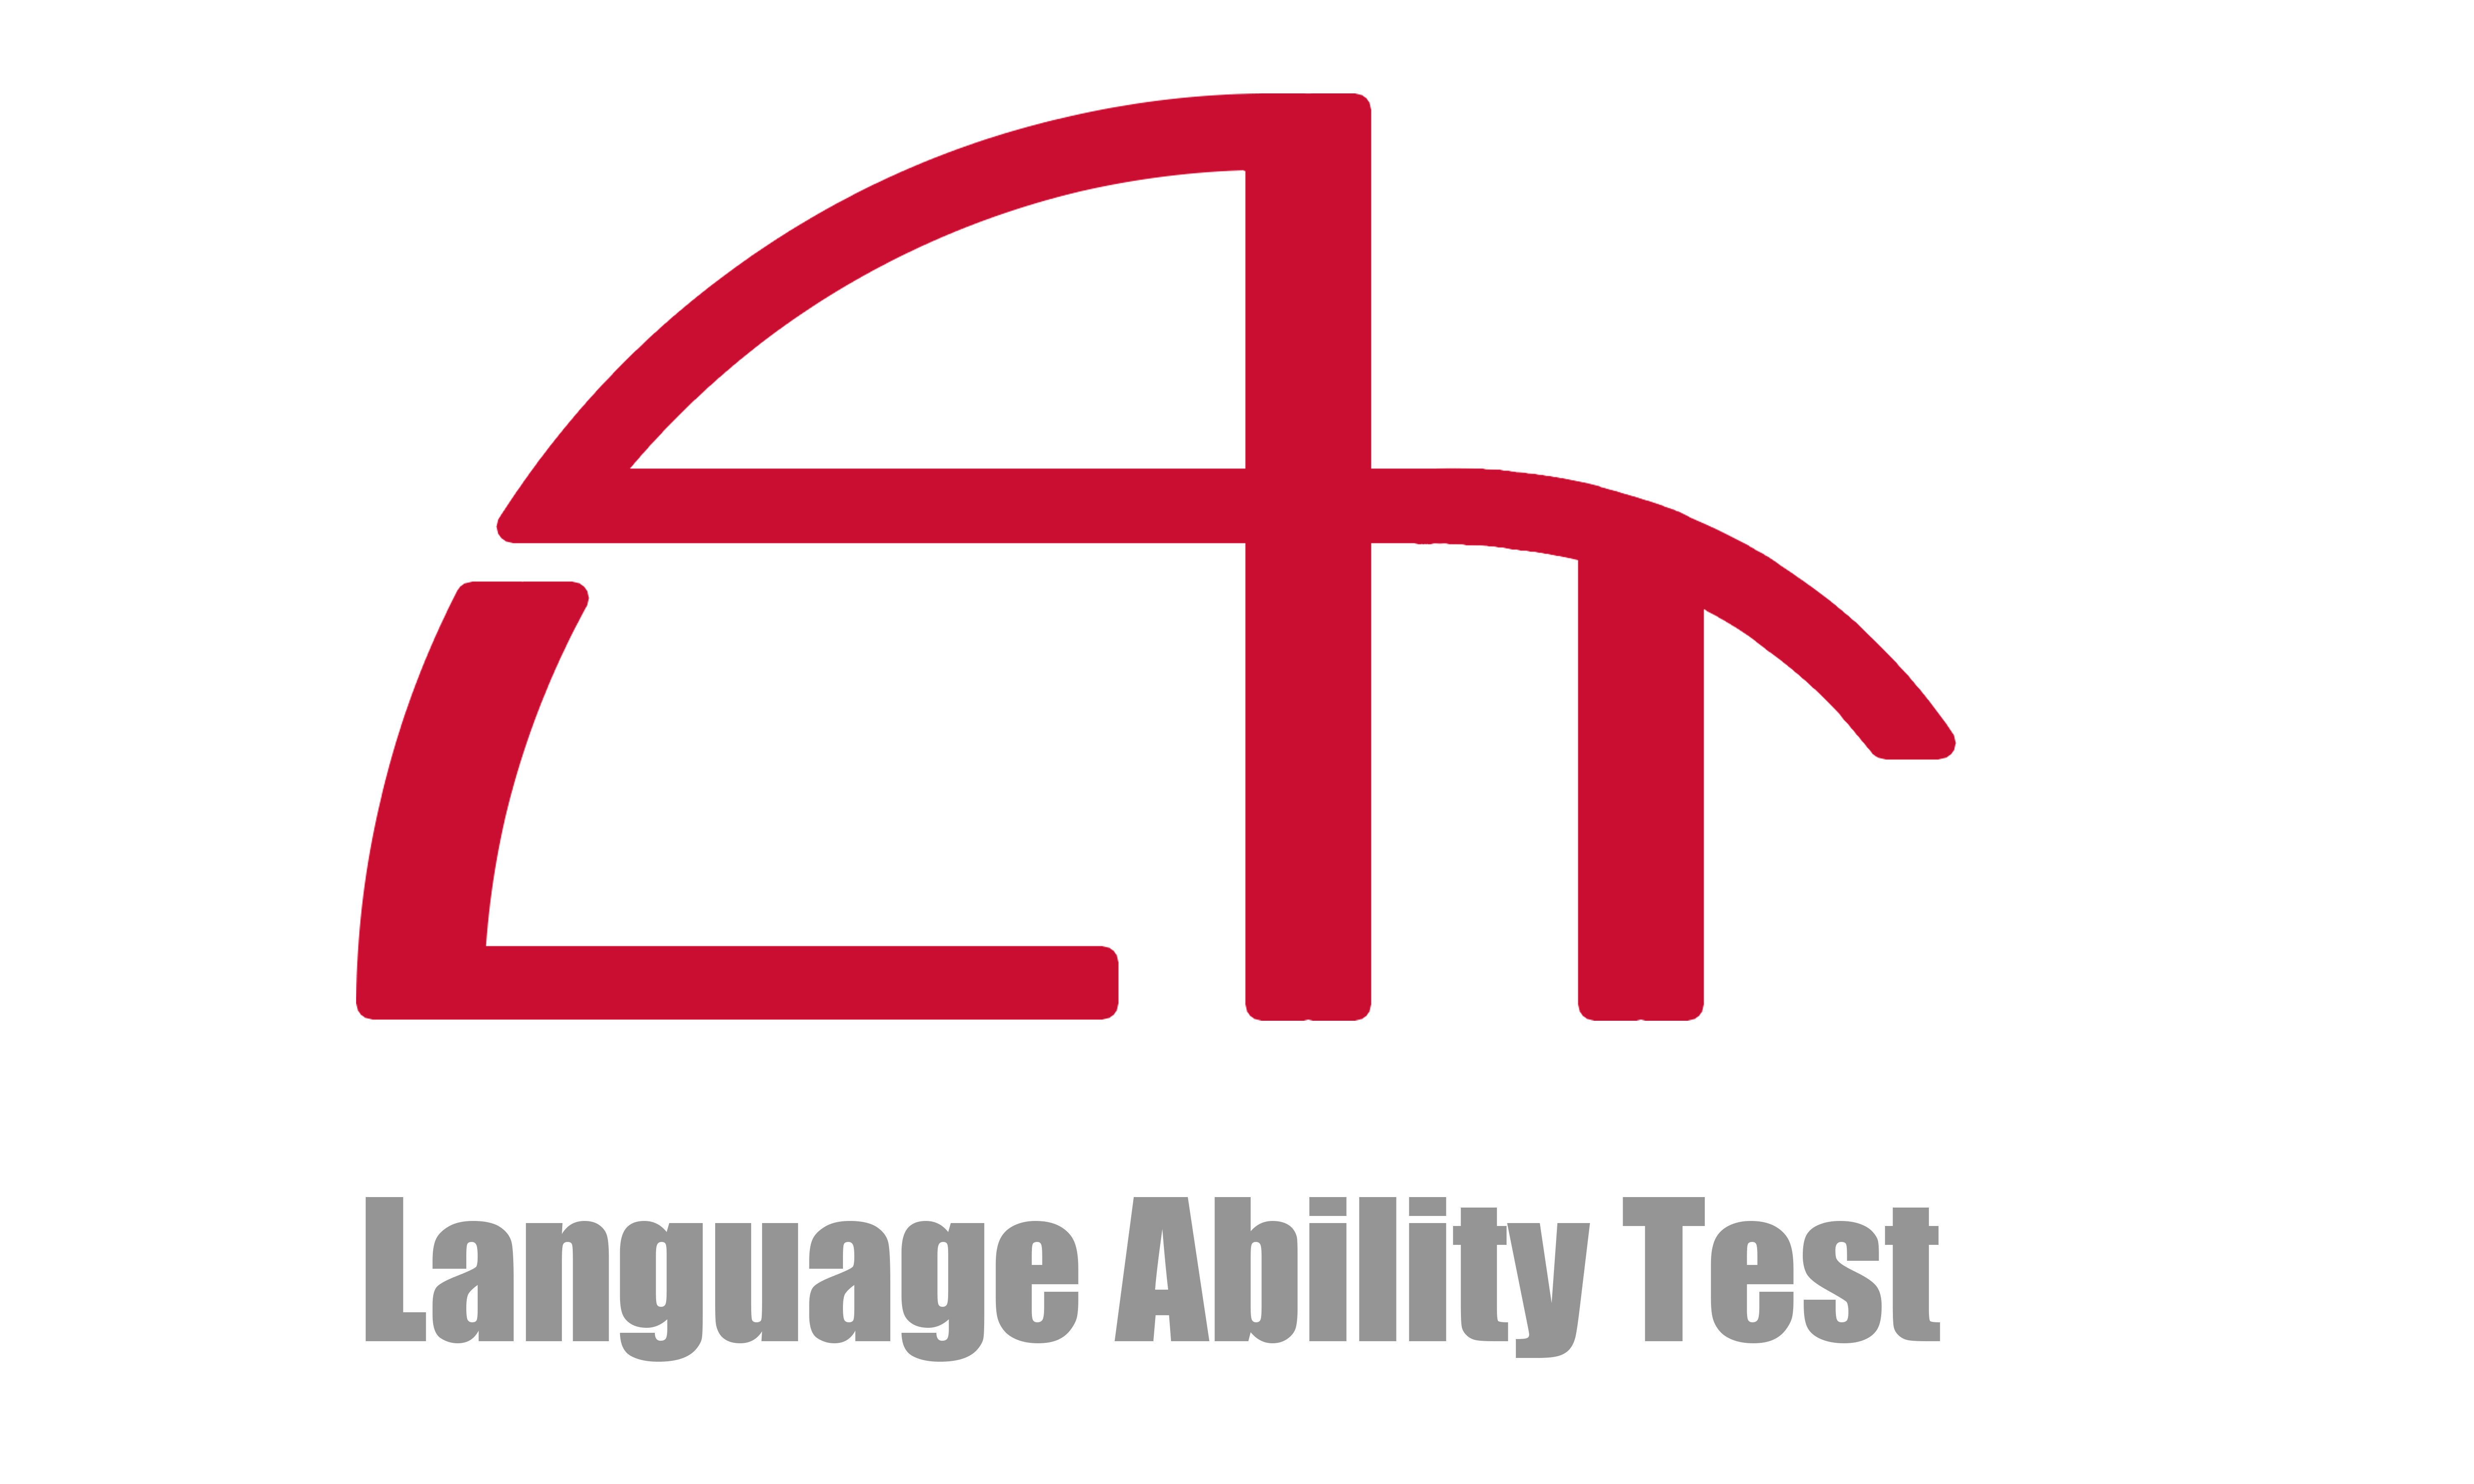 LAT(語言能力綜合評測的英文縮寫，全稱為Language Ability Test)